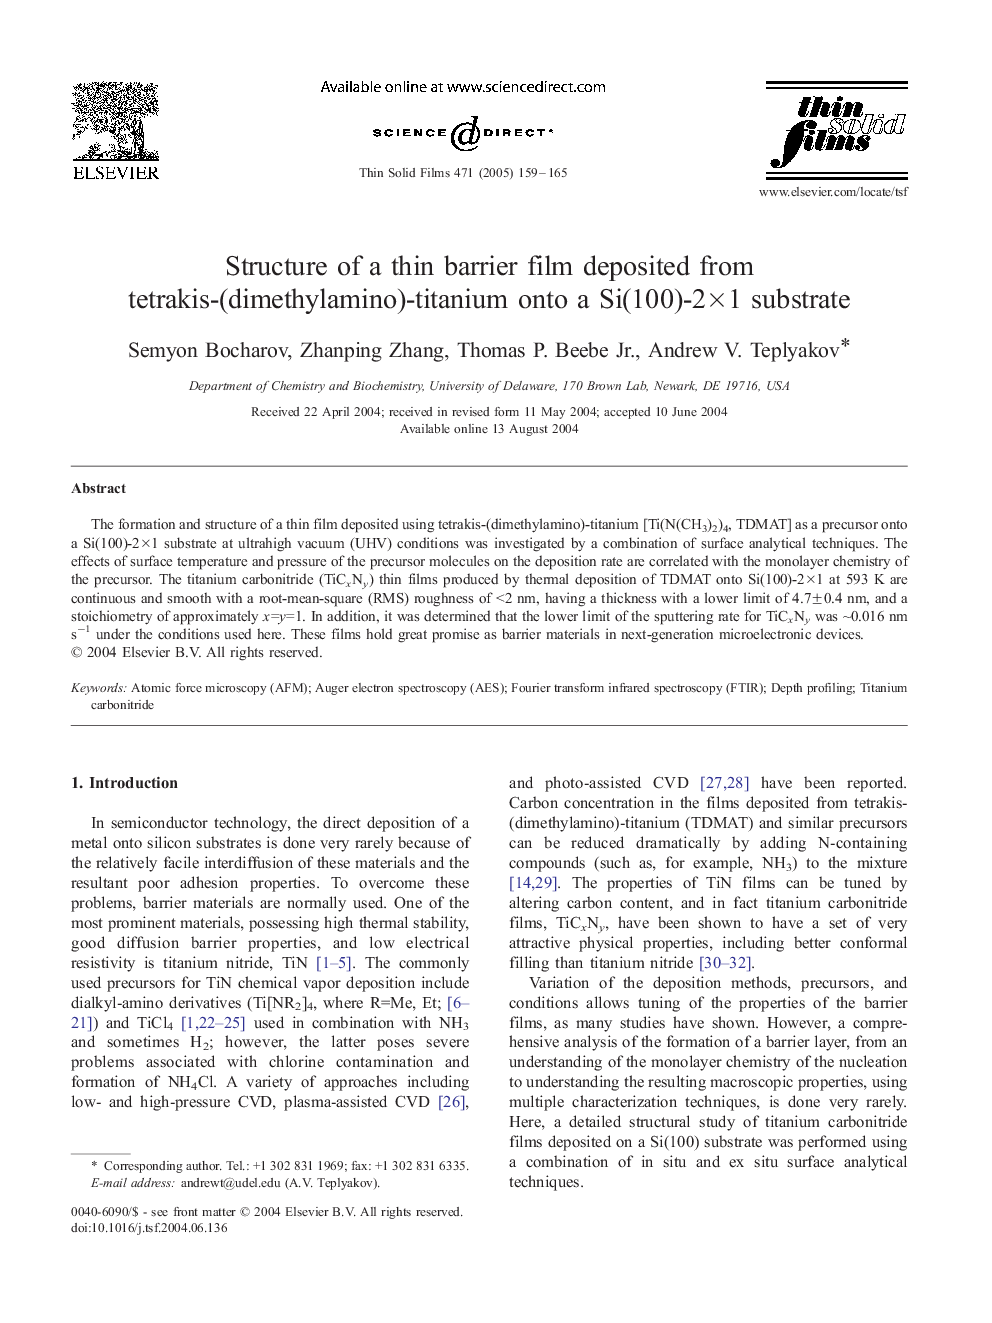 Structure of a thin barrier film deposited from tetrakis-(dimethylamino)-titanium onto a Si(100)-2Ã1 substrate